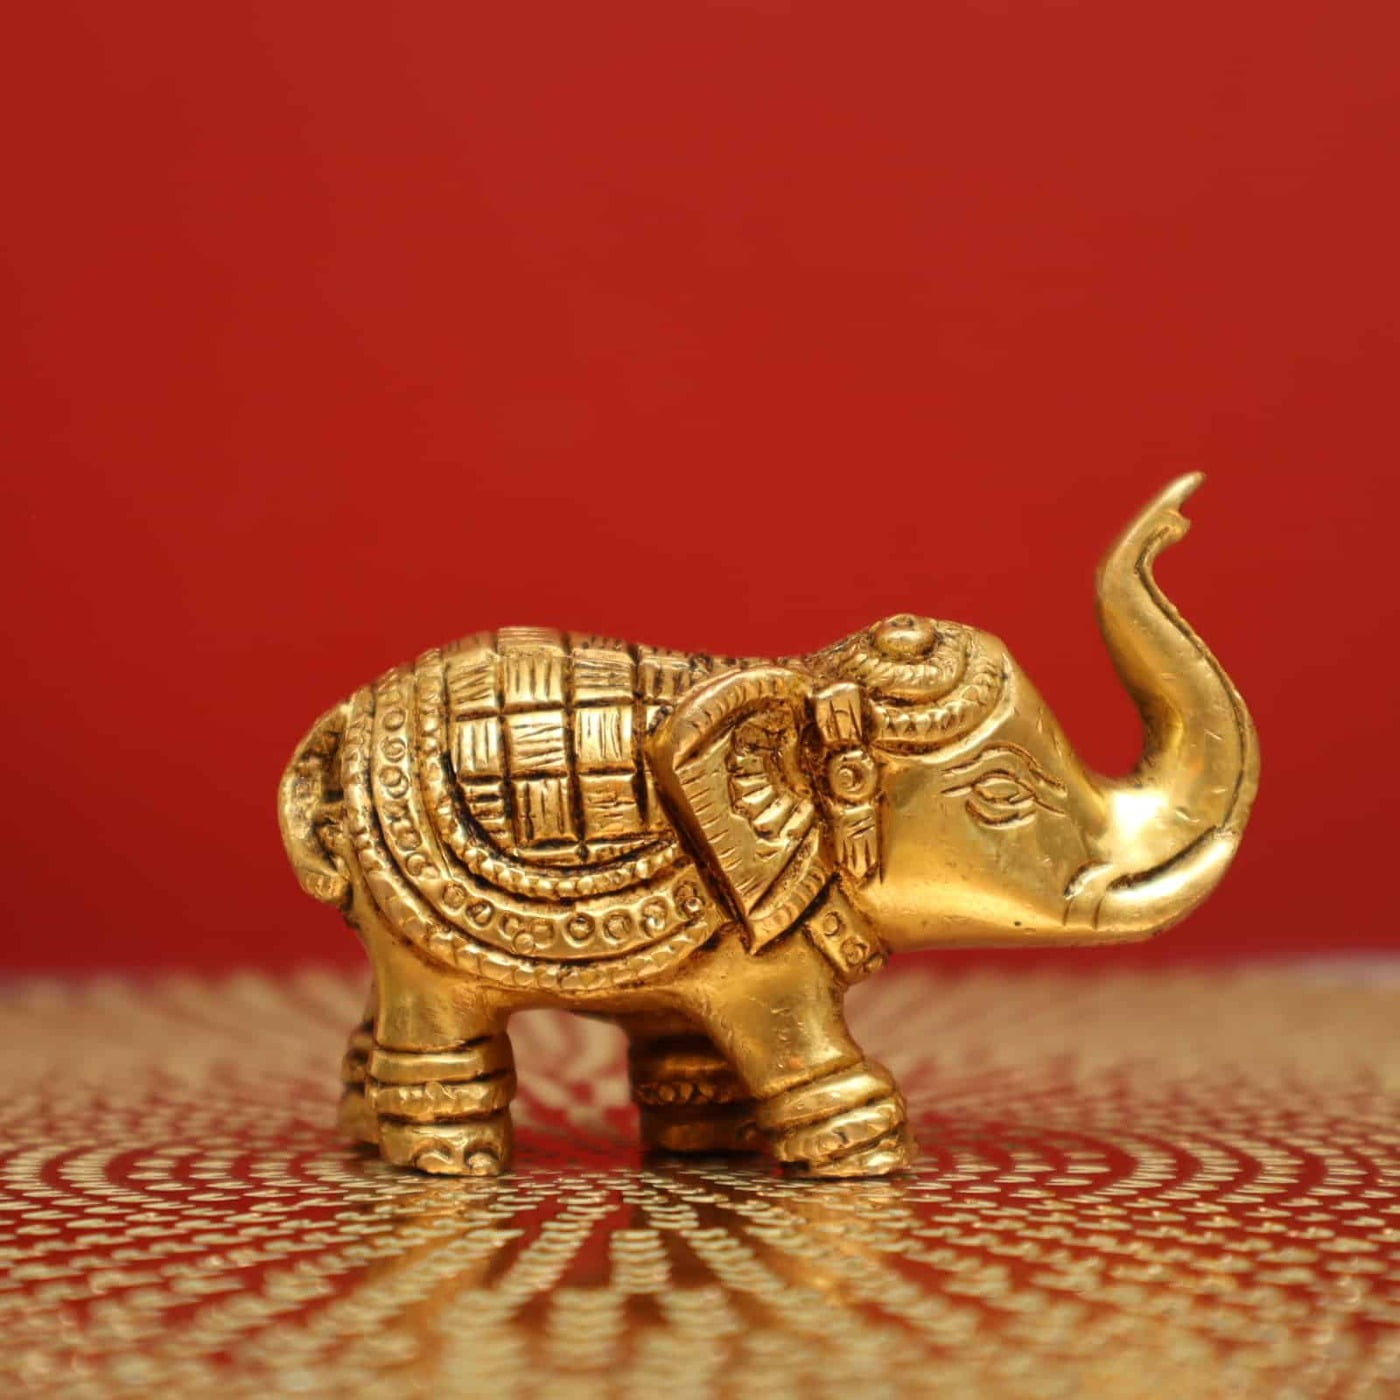  Toyvian 2 Sets Mini Resin Elephant Exquisite Resin